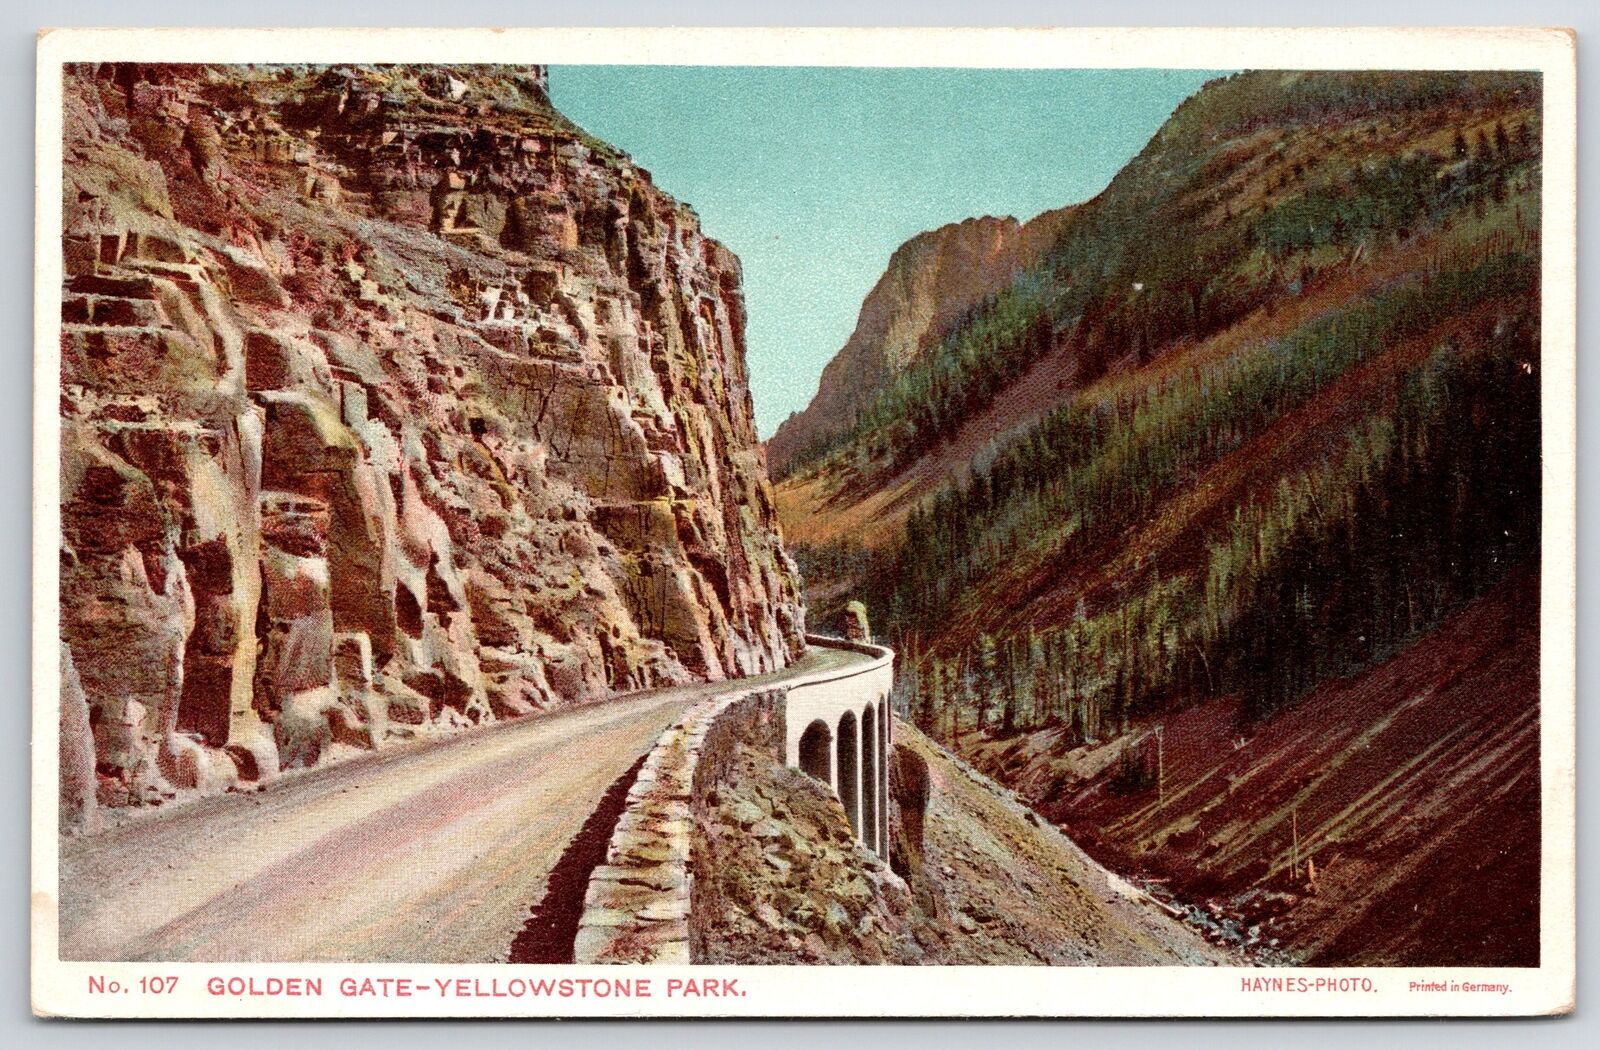 Golden Gate Yellowstone Park Road Way Through The Cliffs, Vintage Postcard